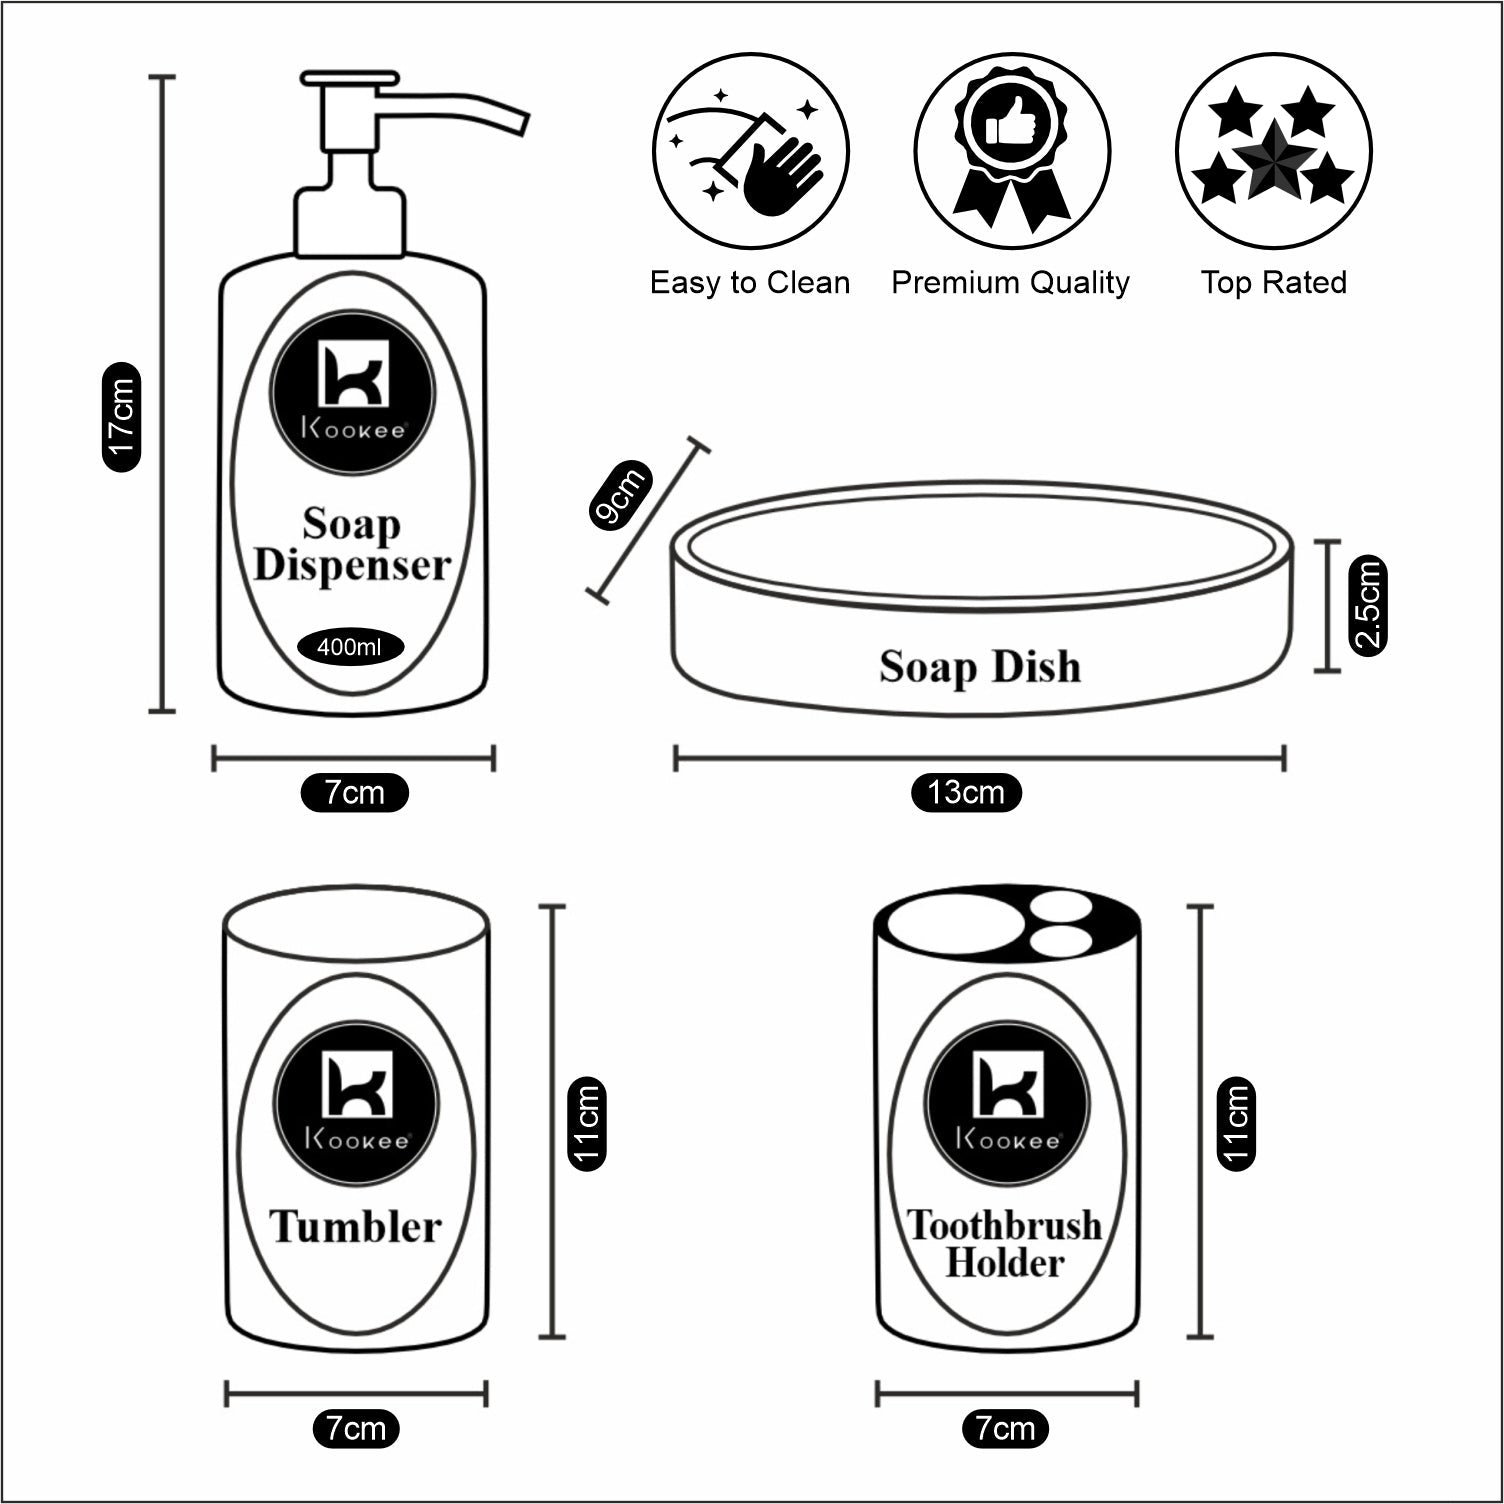 Ceramic Bathroom Accessories Set of 4 Bath Set with Soap Dispenser (9750)